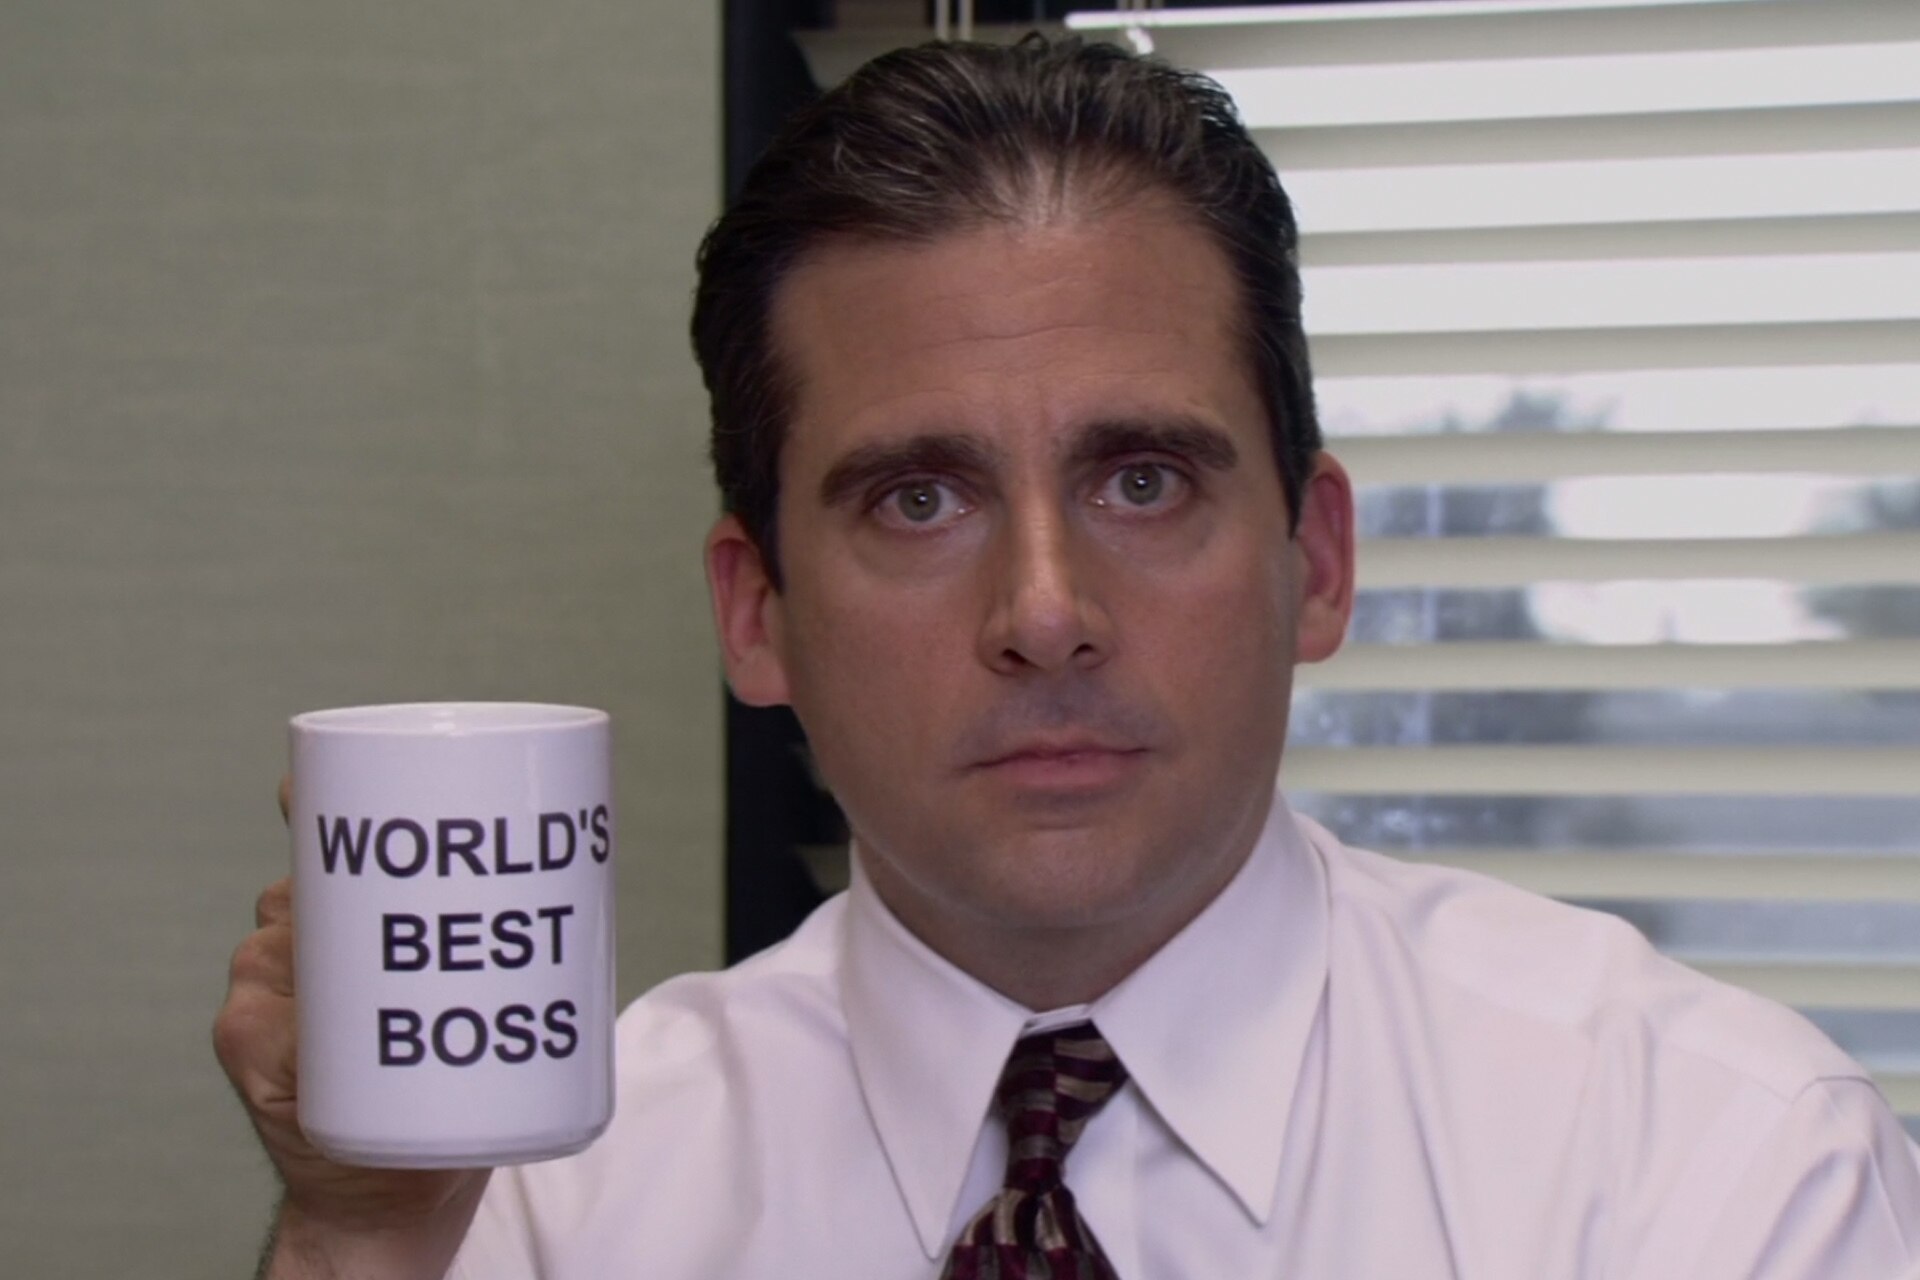 In the boss is office